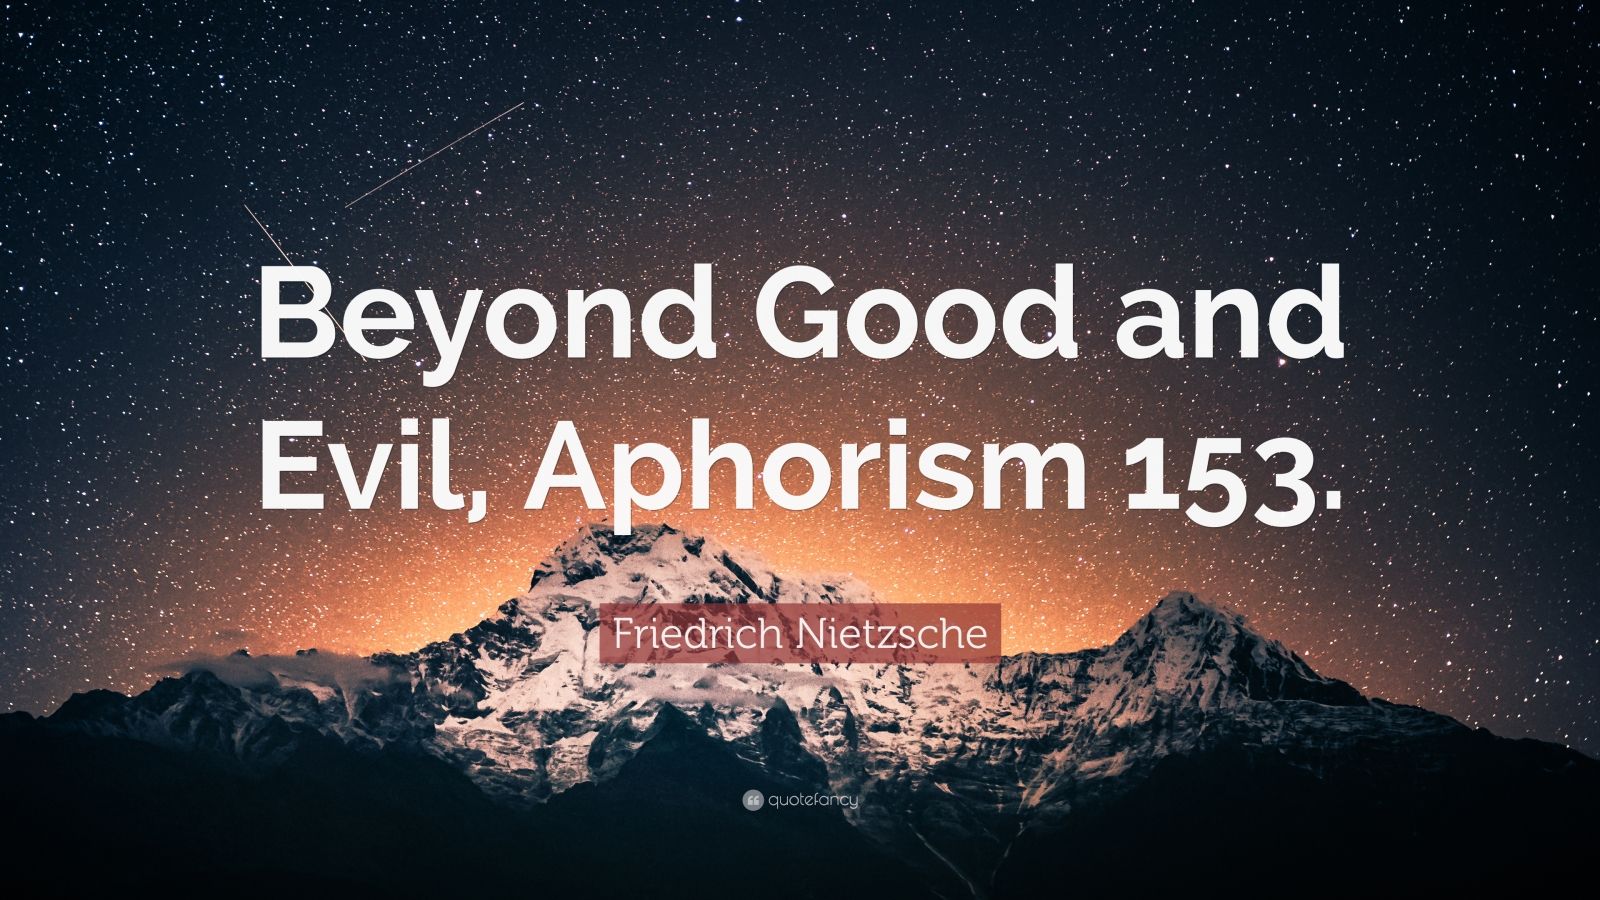 Friedrich Nietzsche Quote “Beyond Good and Evil, Aphorism 153.” (7